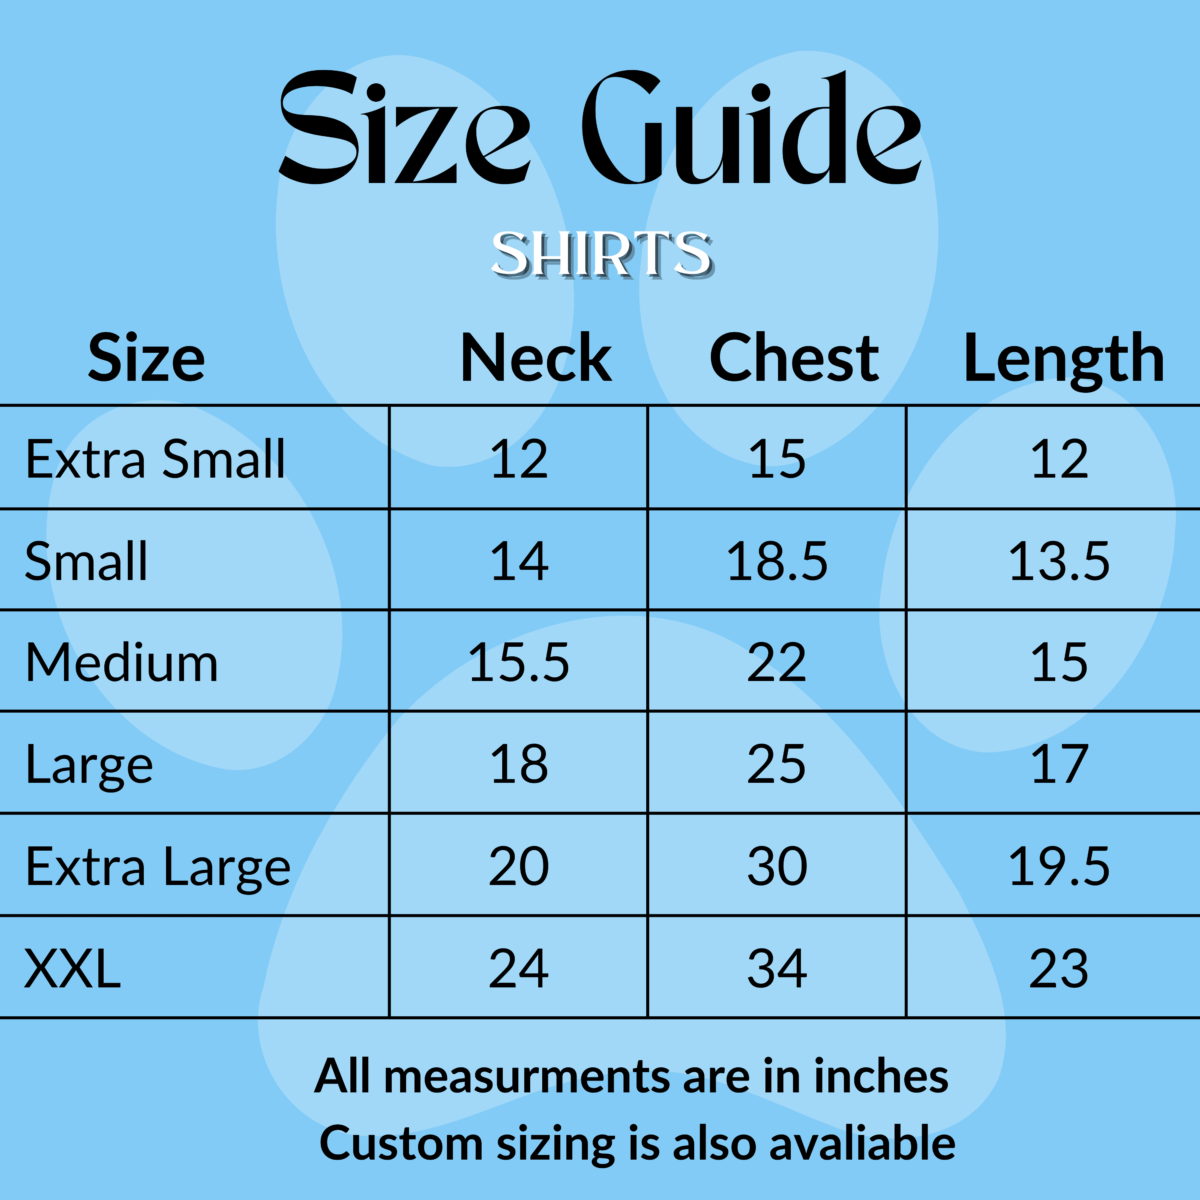 Size Shirt